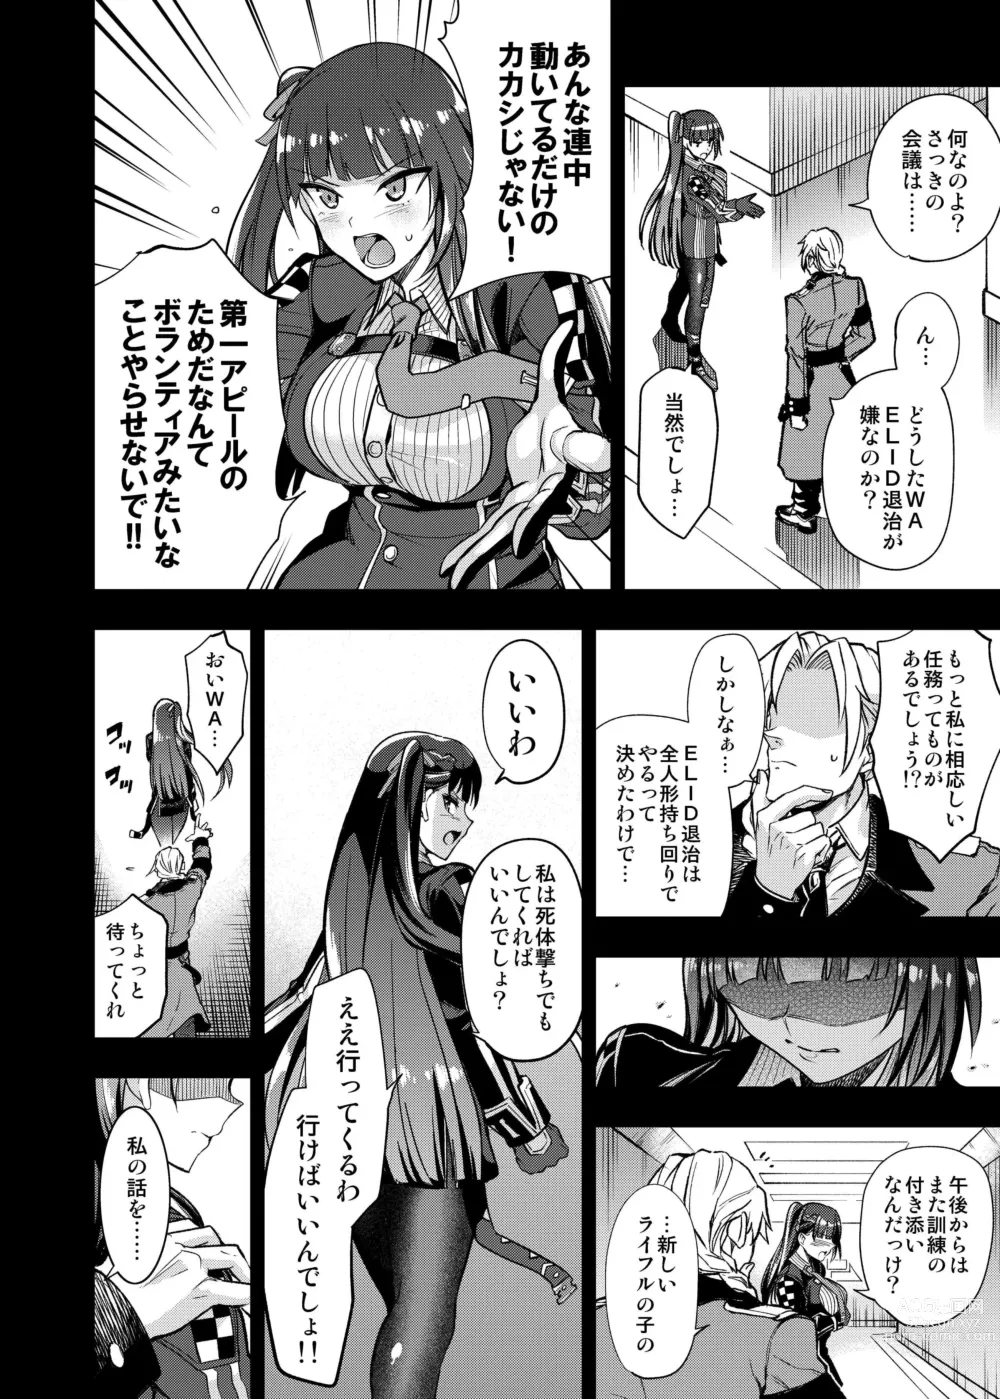 Page 5 of doujinshi Marunomare Wa-chan